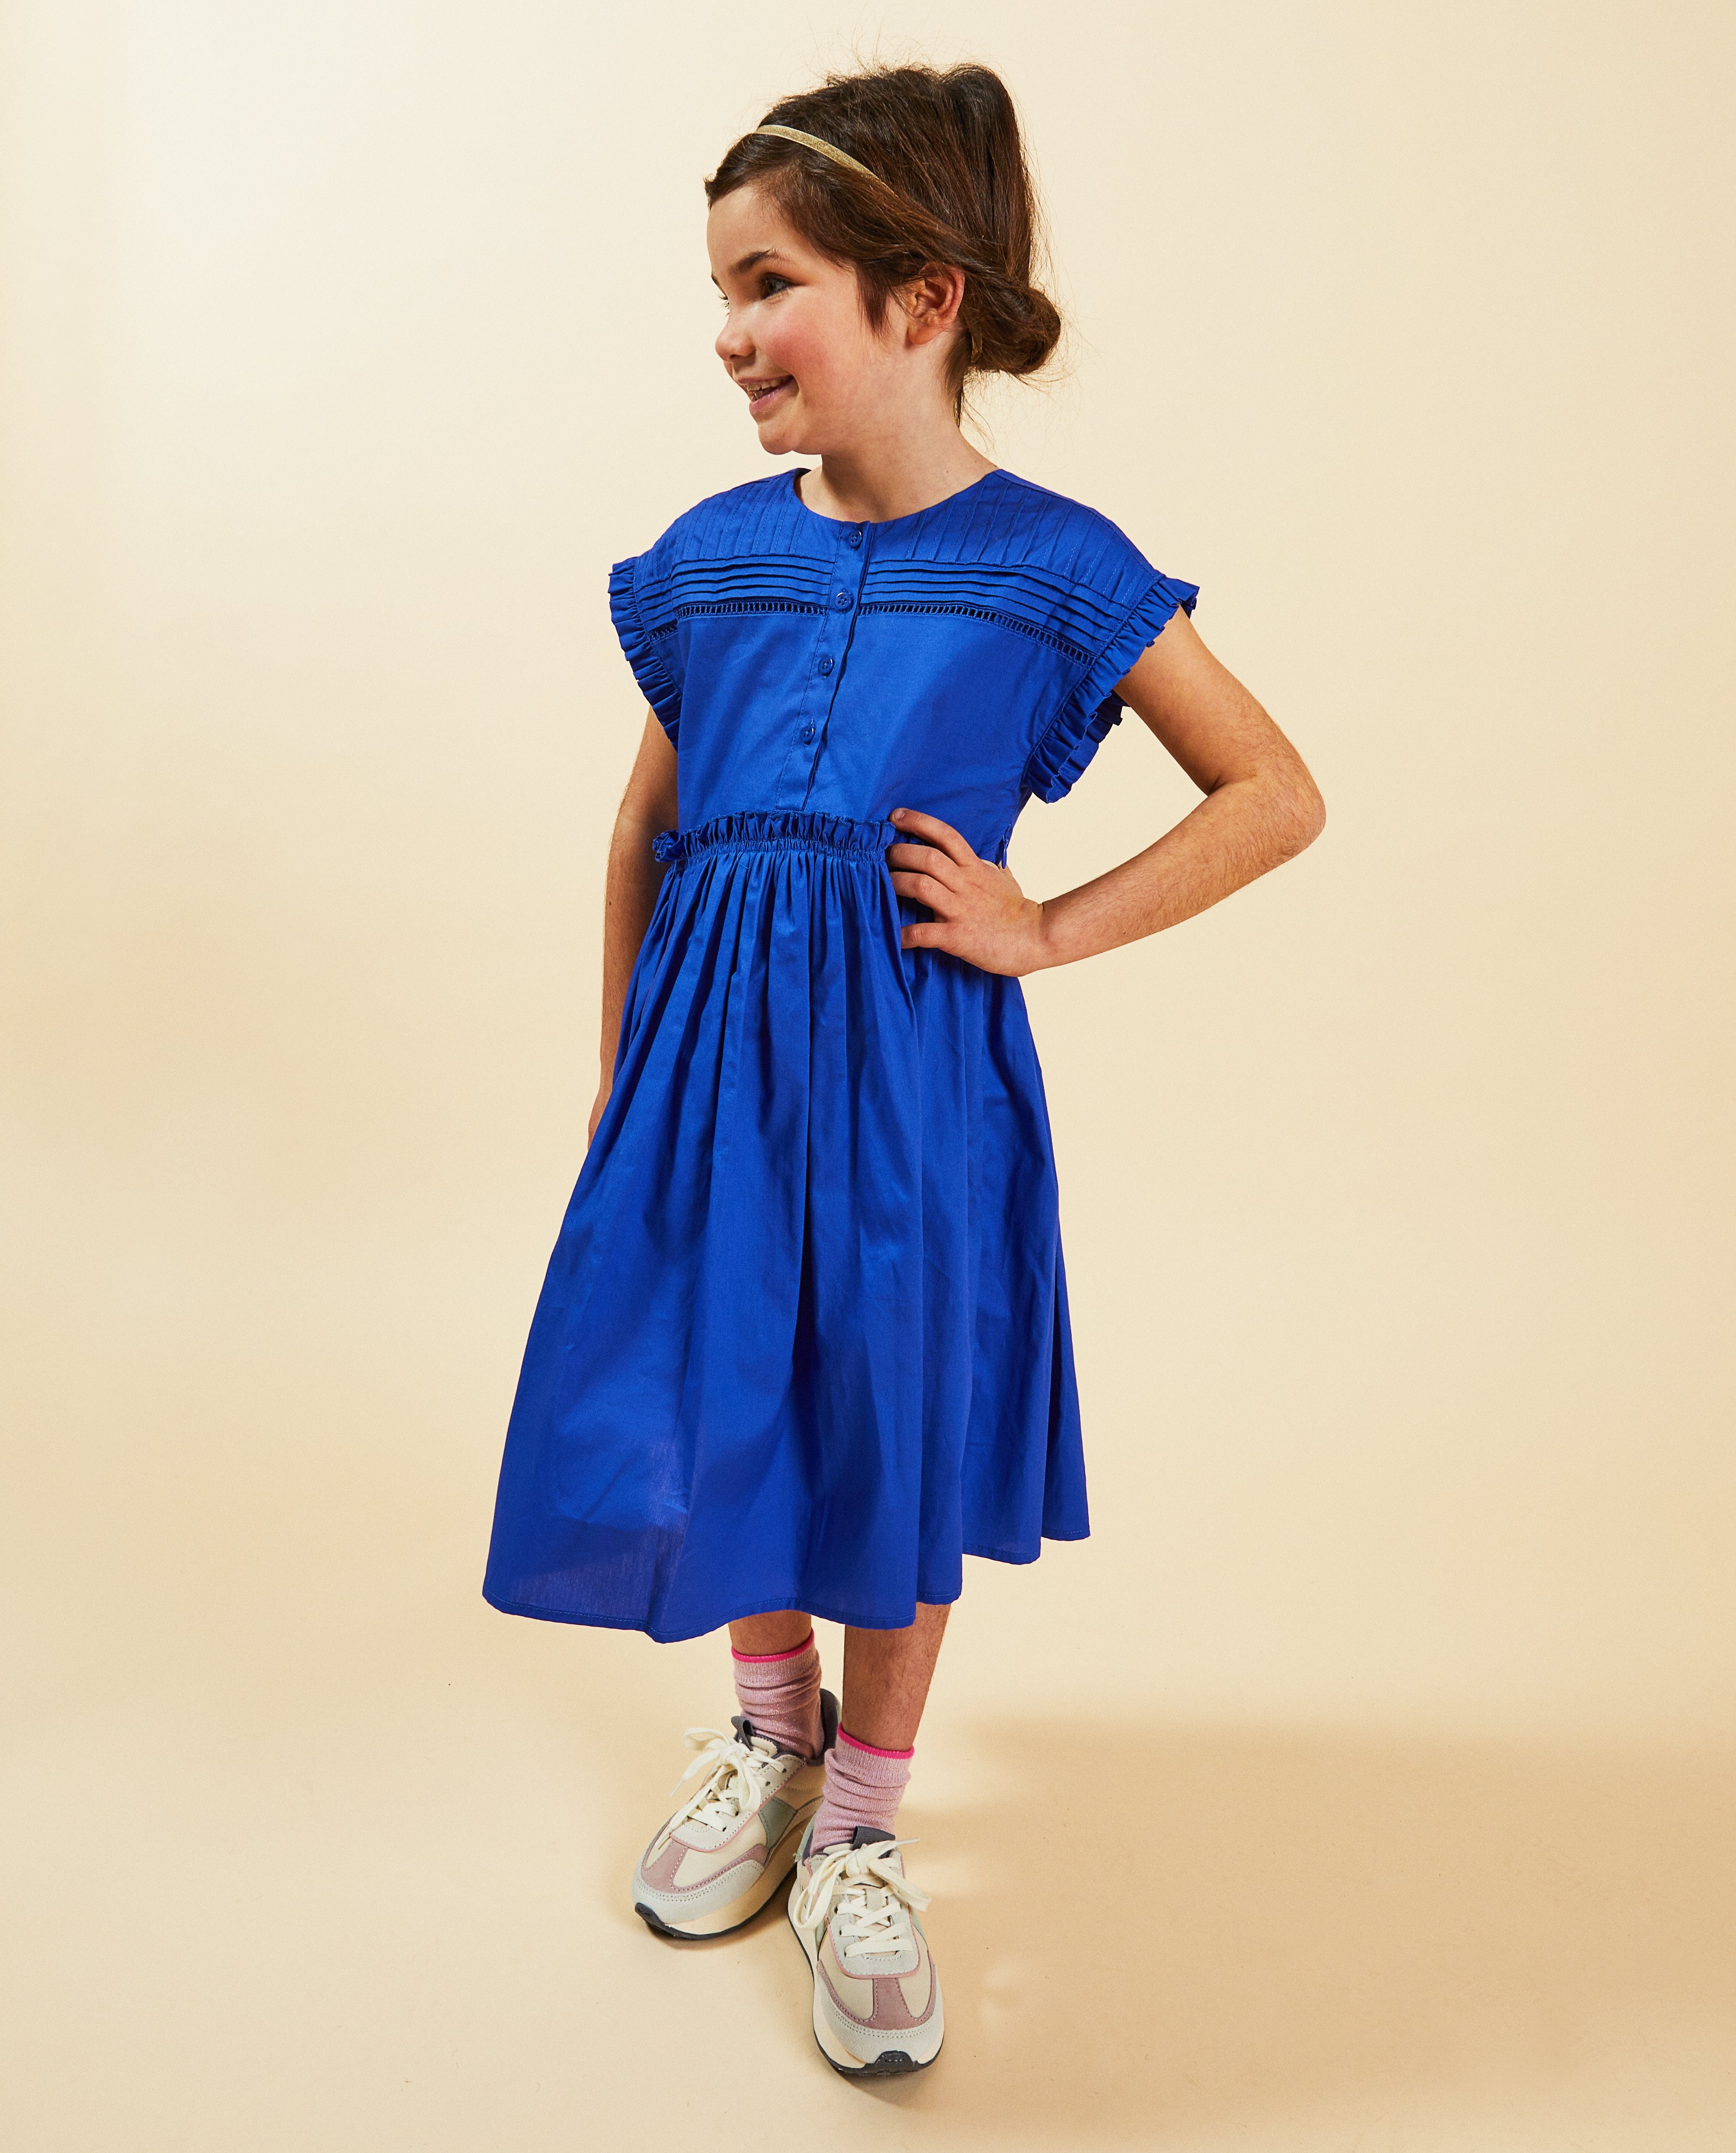 Kleedjes - Blauwe jurk, Communie